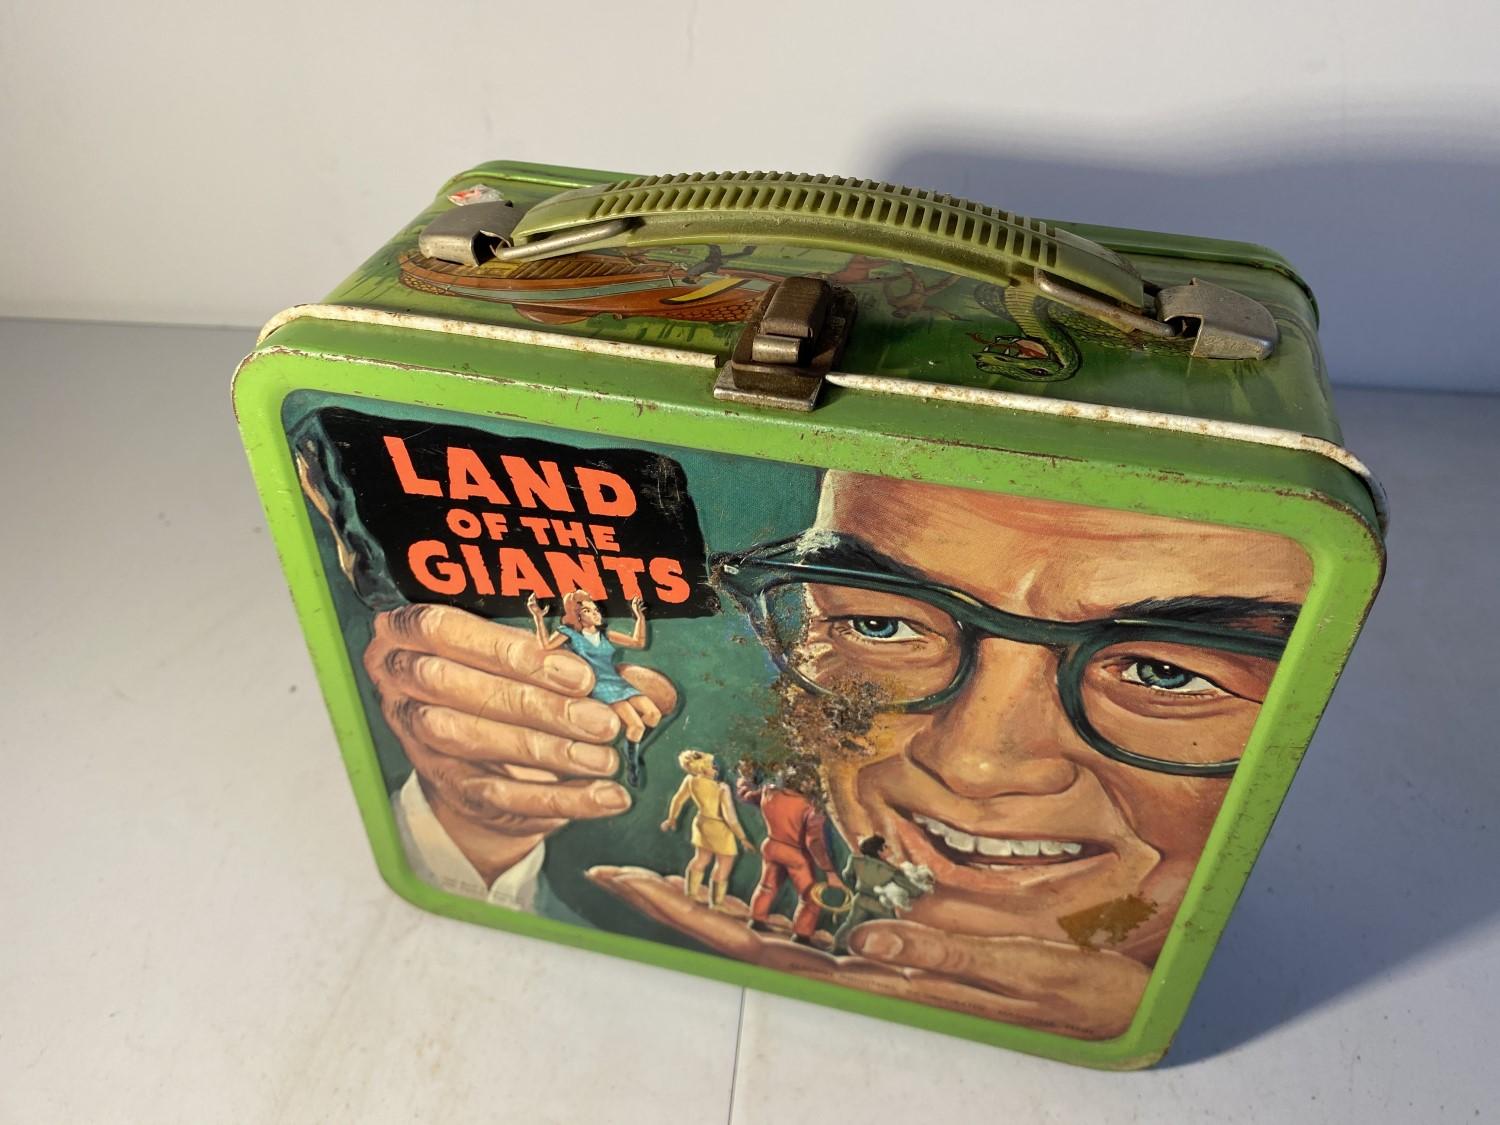 Vintage Metal Lunchbox - Land of Giants